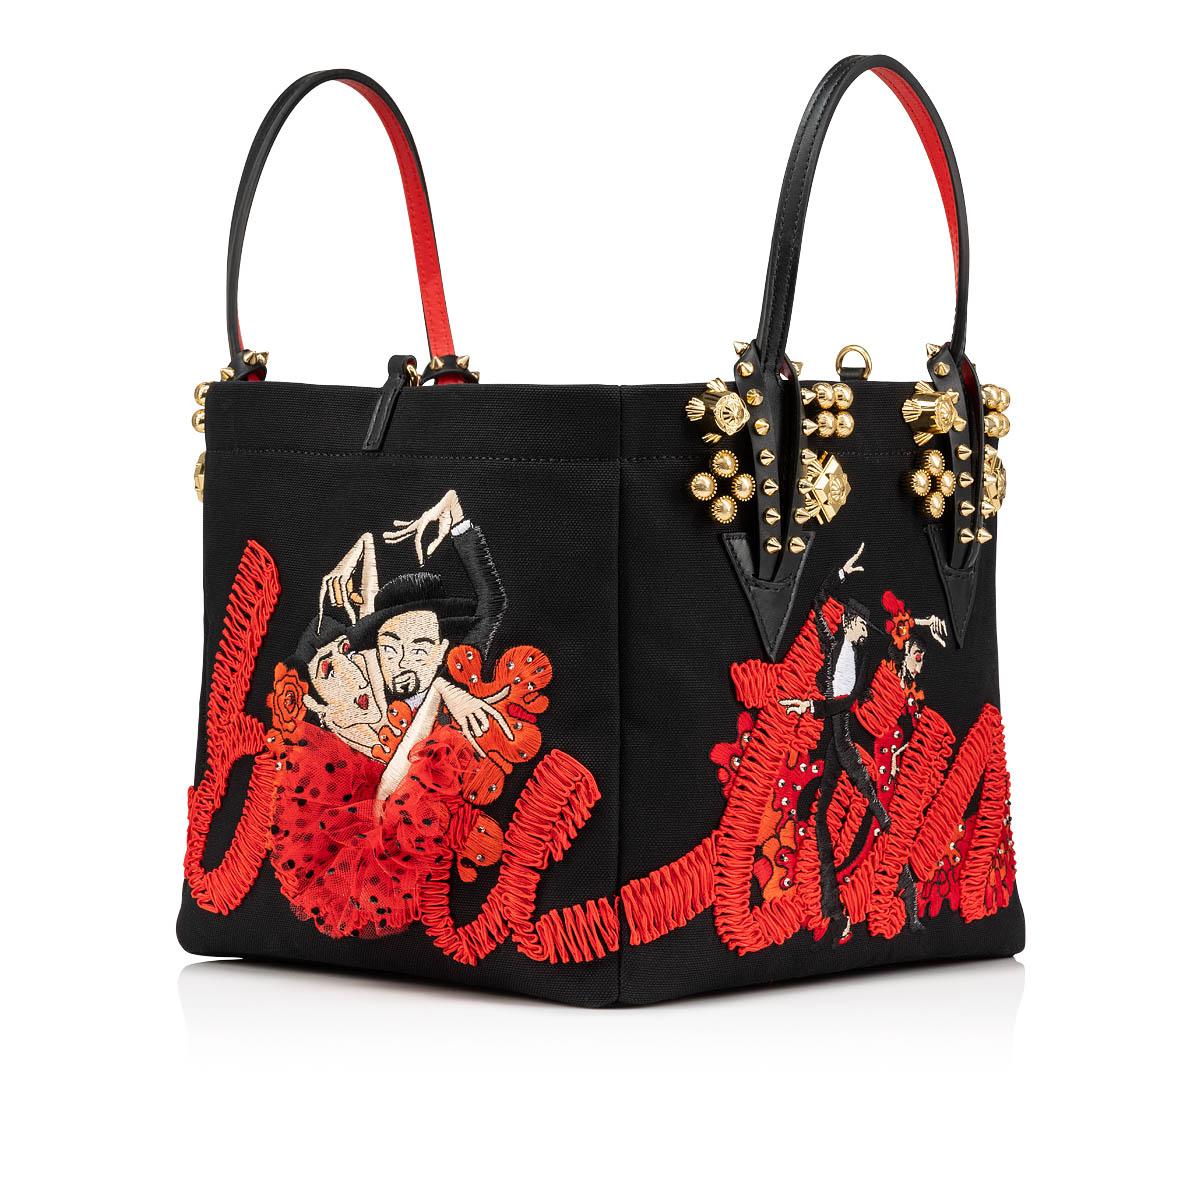 Flamencaba small - Tote bag - Flamenco embroidery and calf leather - Black  - Christian Louboutin